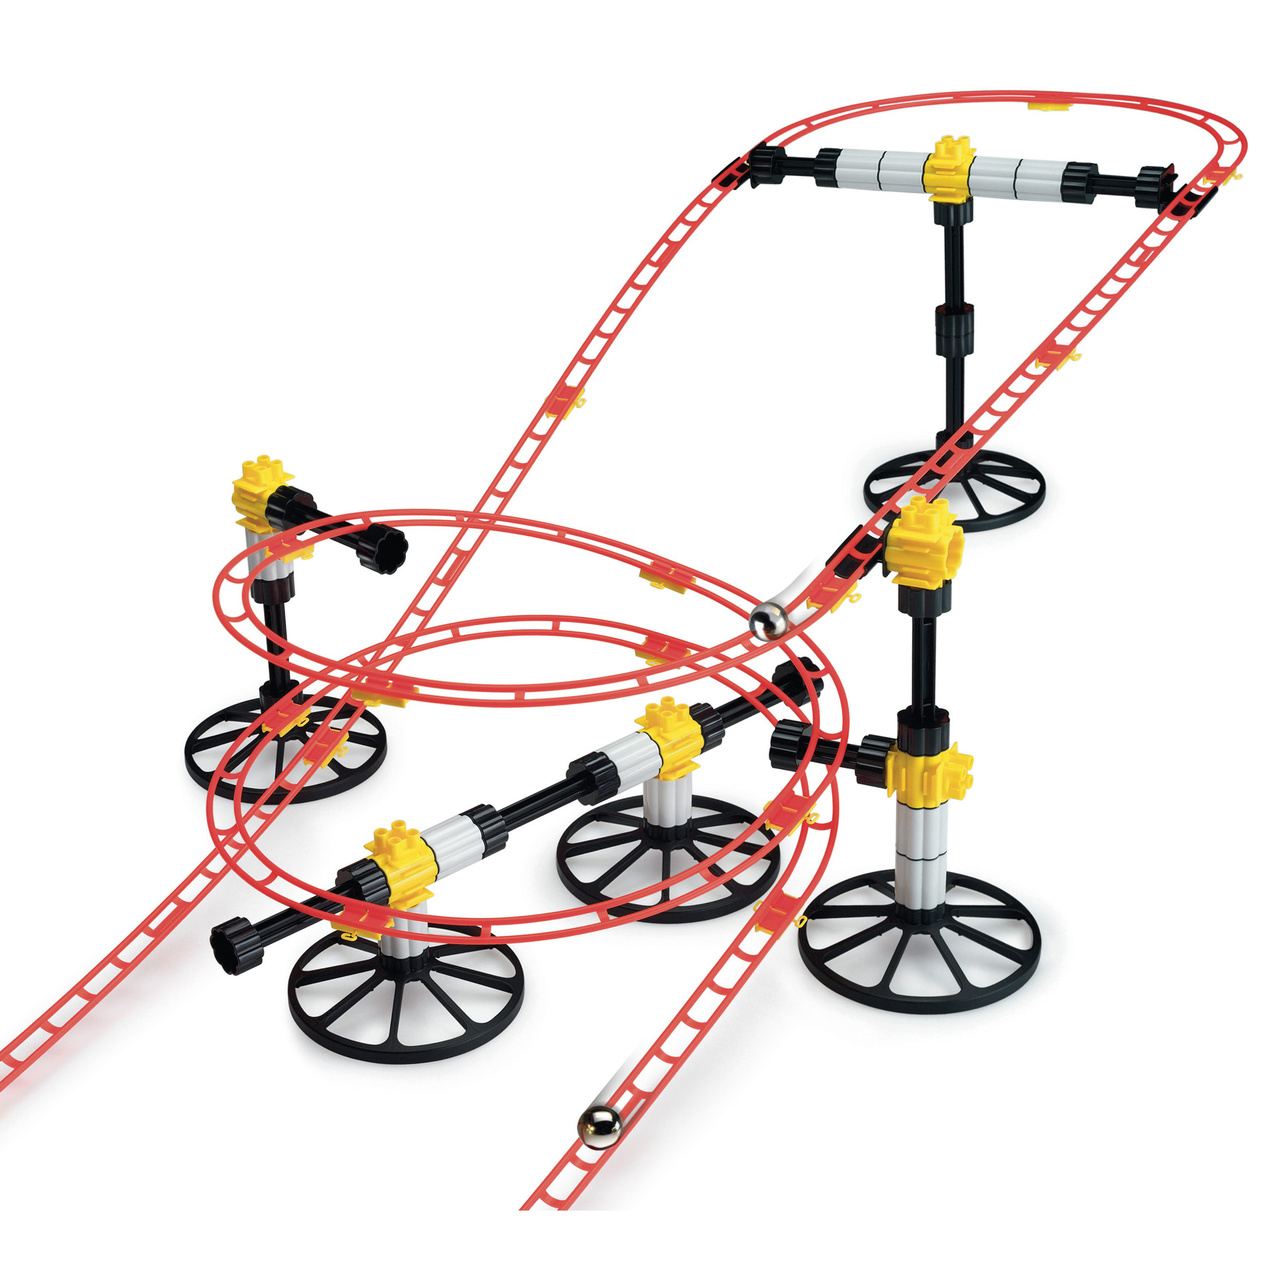 Rakennuslelut quercetti skyrail roller coaster mini